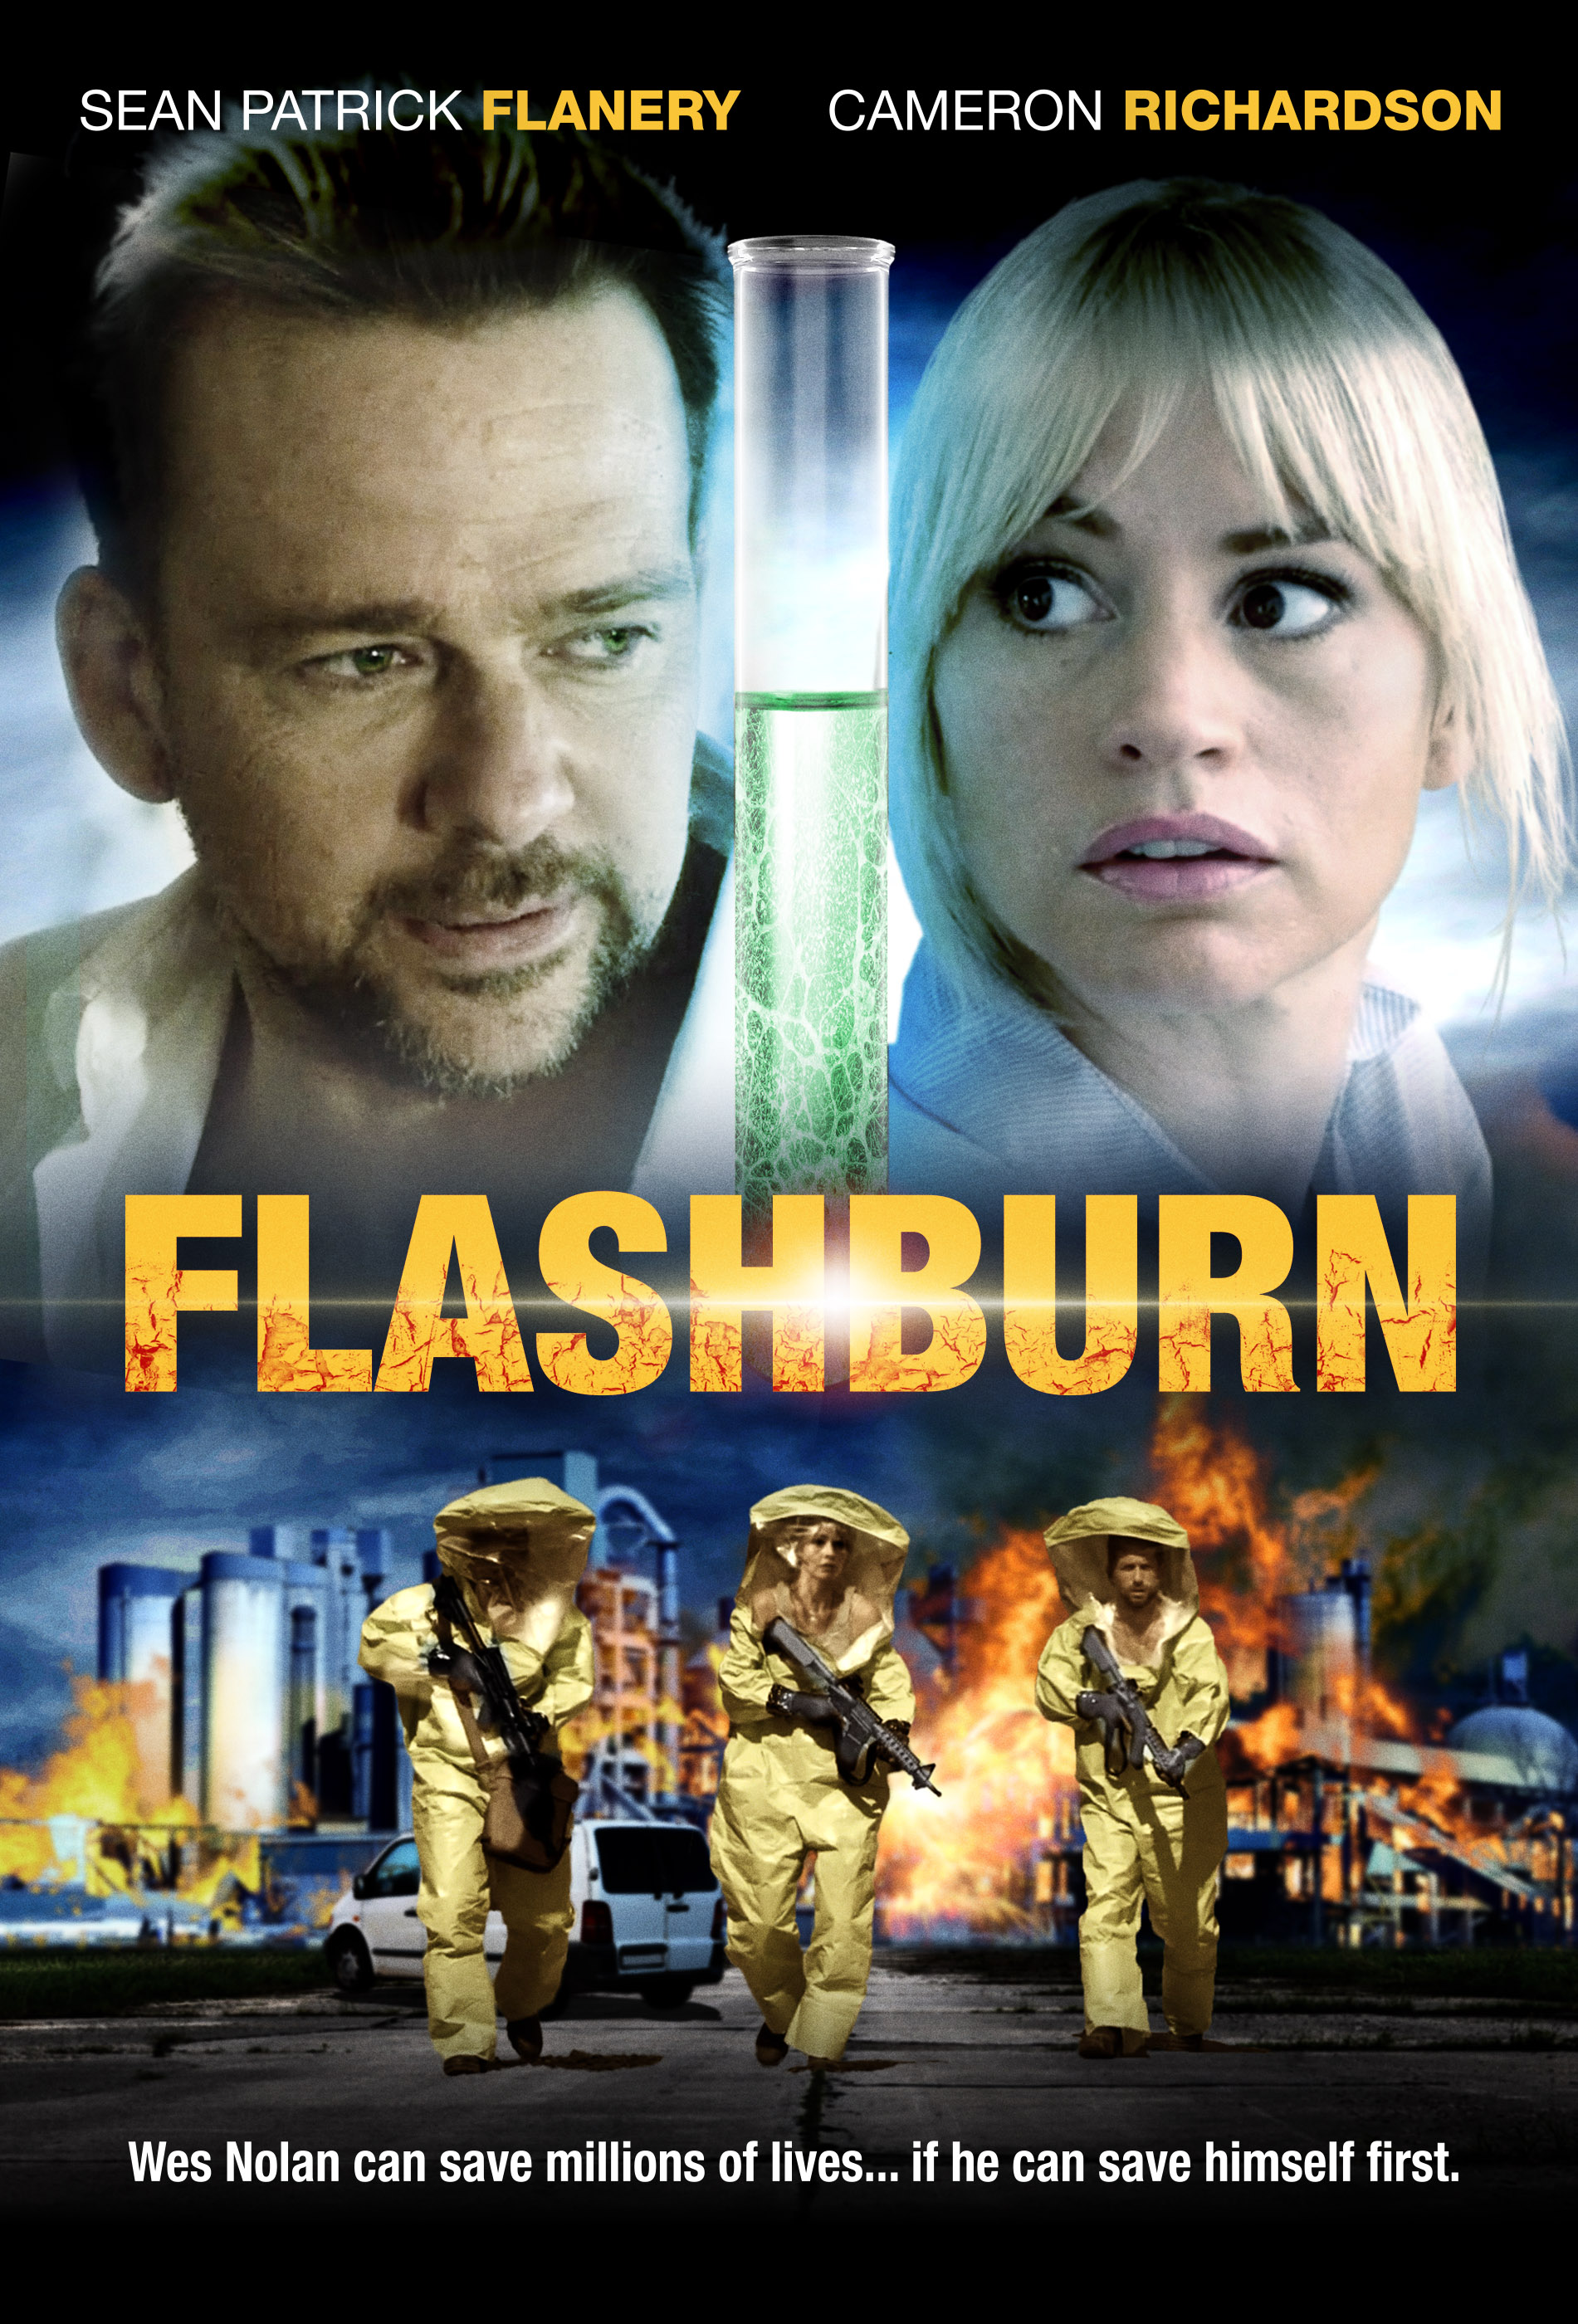 Nonton film Flashburn layarkaca21 indoxx1 ganool online streaming terbaru